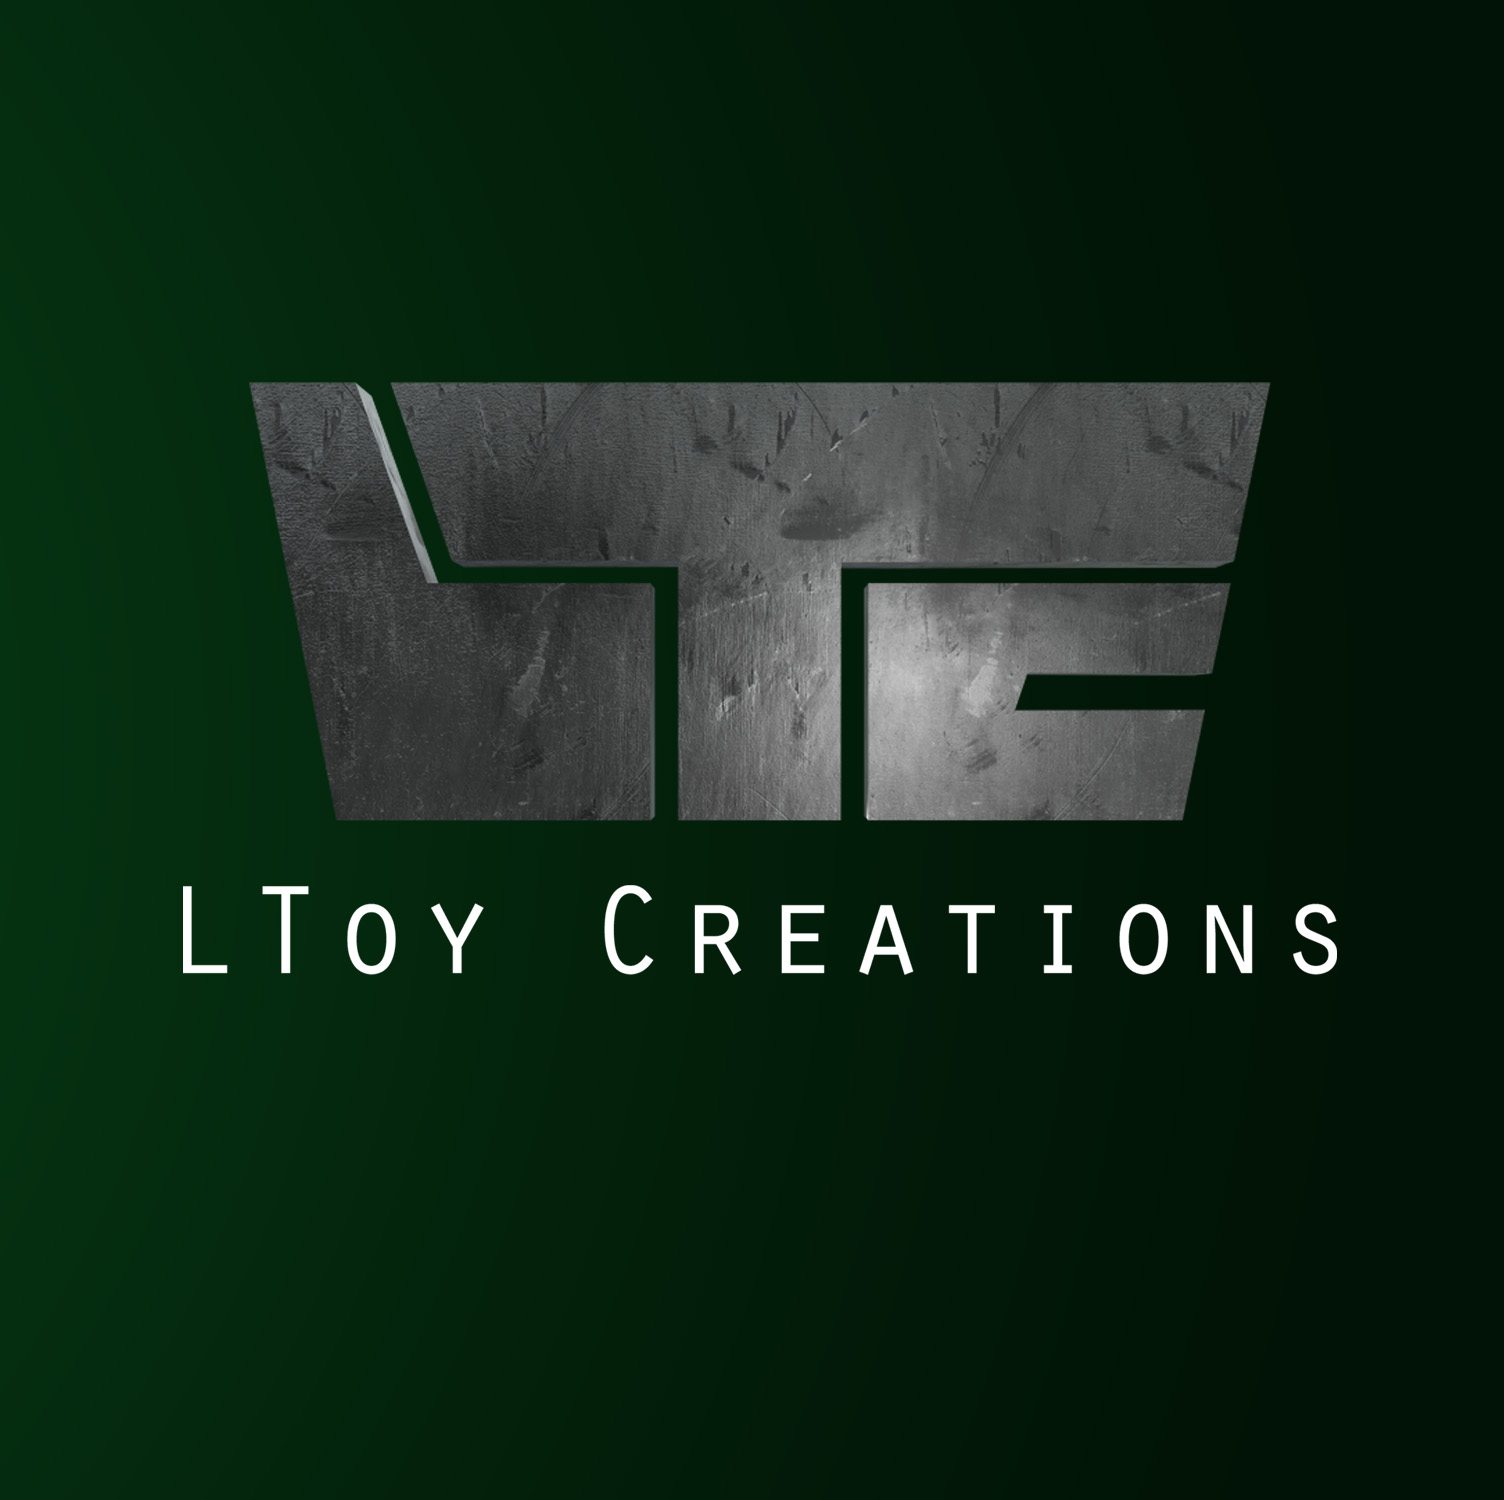 LToy Creations